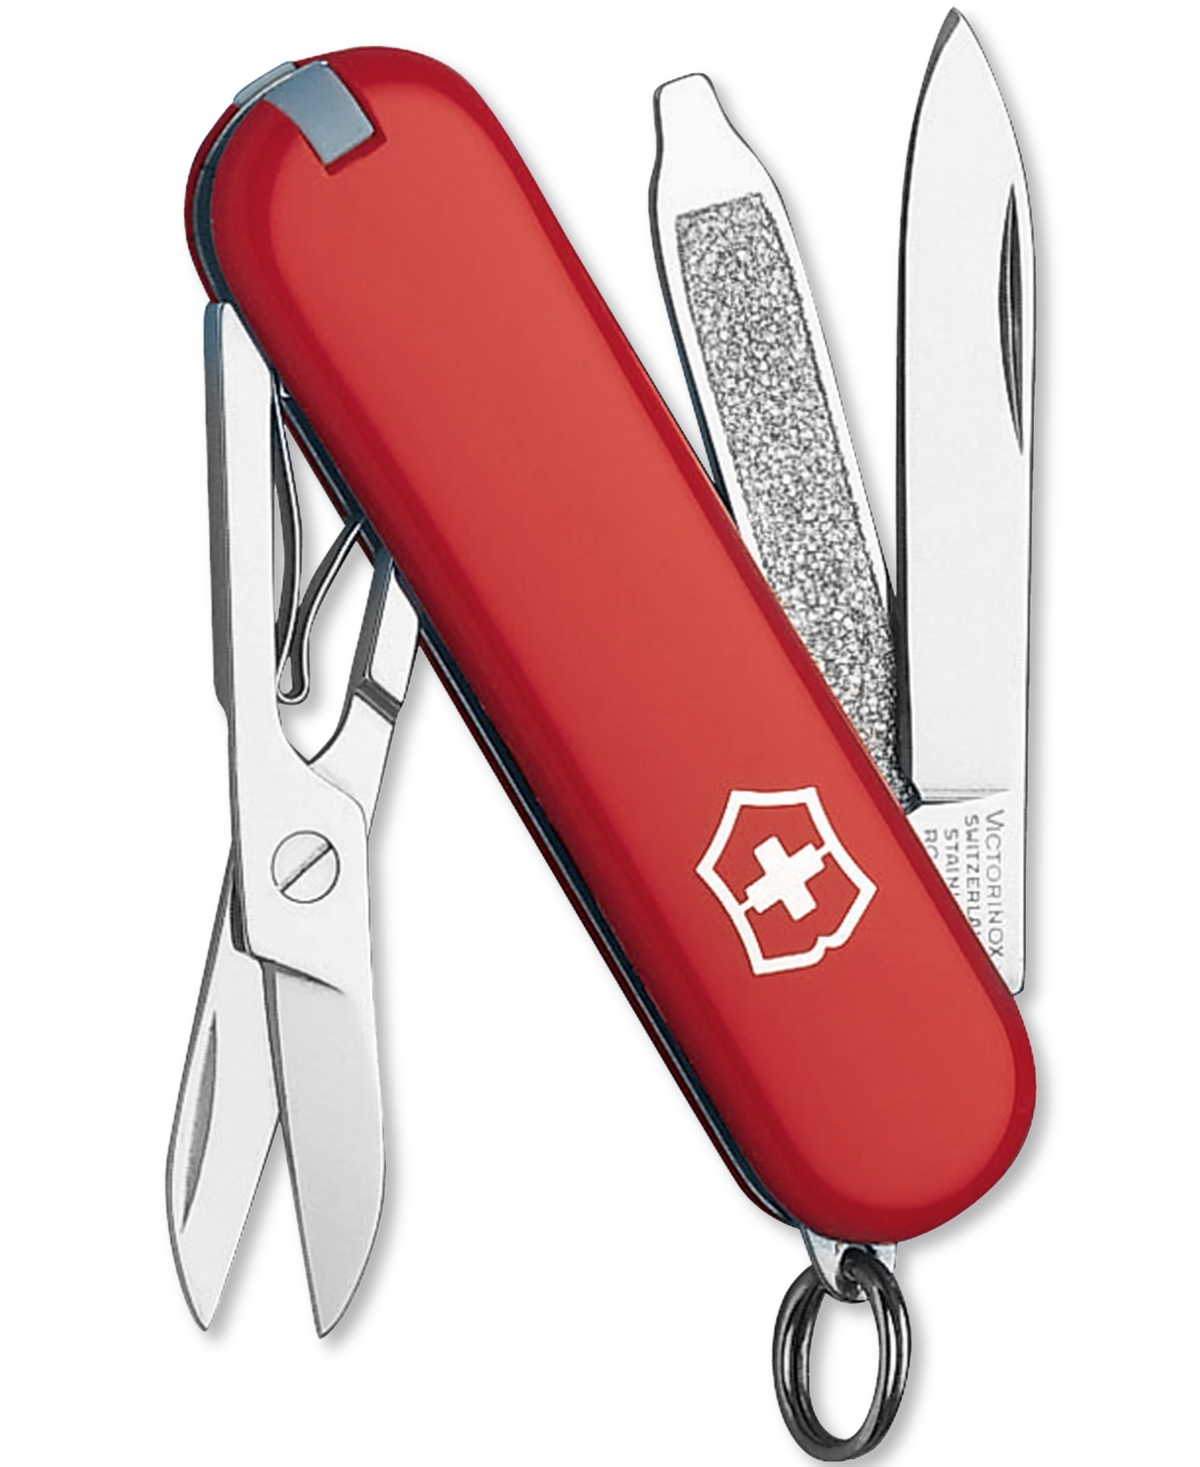 Swiss Army Classic Sd Pocket Knife - Vx Red